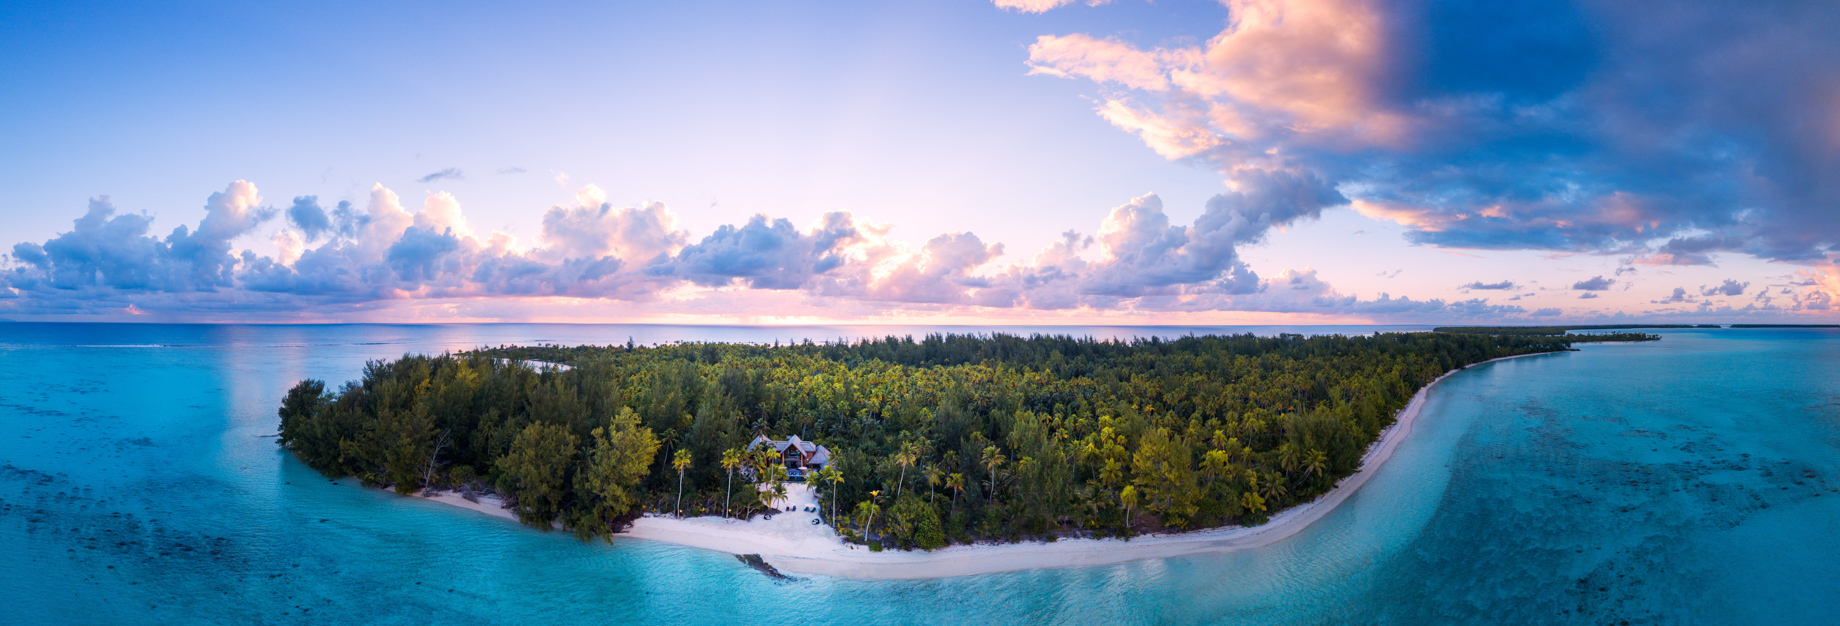 The Brando Resort - Tetiaroa Private Island, French Polynesia - Resort Aerial Sunset